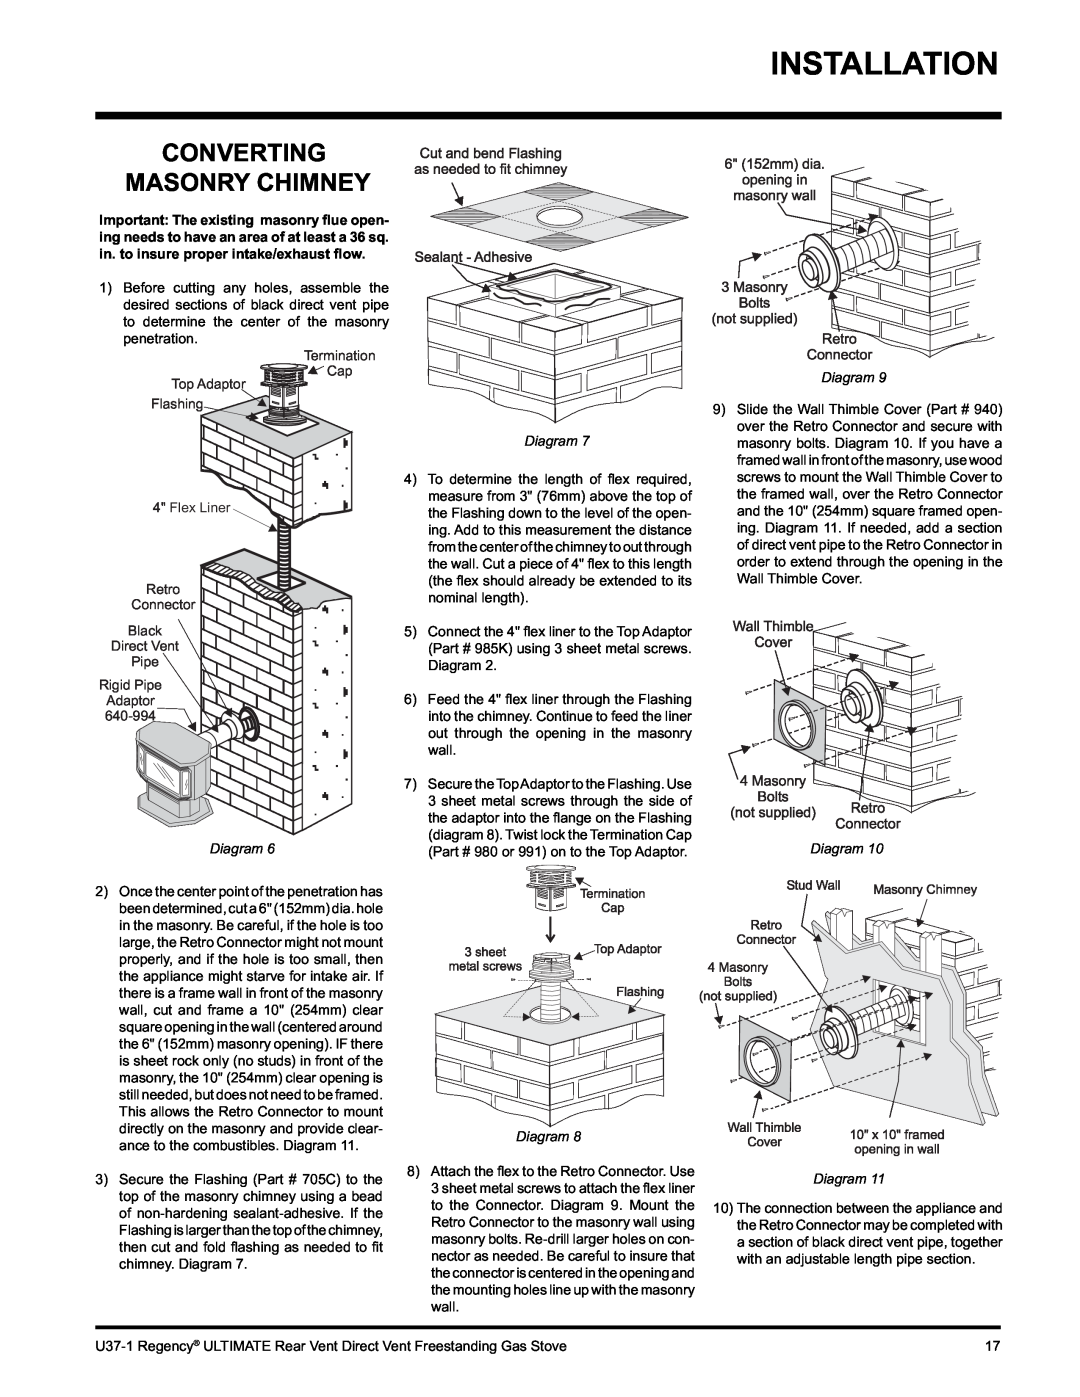 Regency U37-NG1, U37-LP1 installation manual Converting Masonry Chimney, Diagram Diagram 